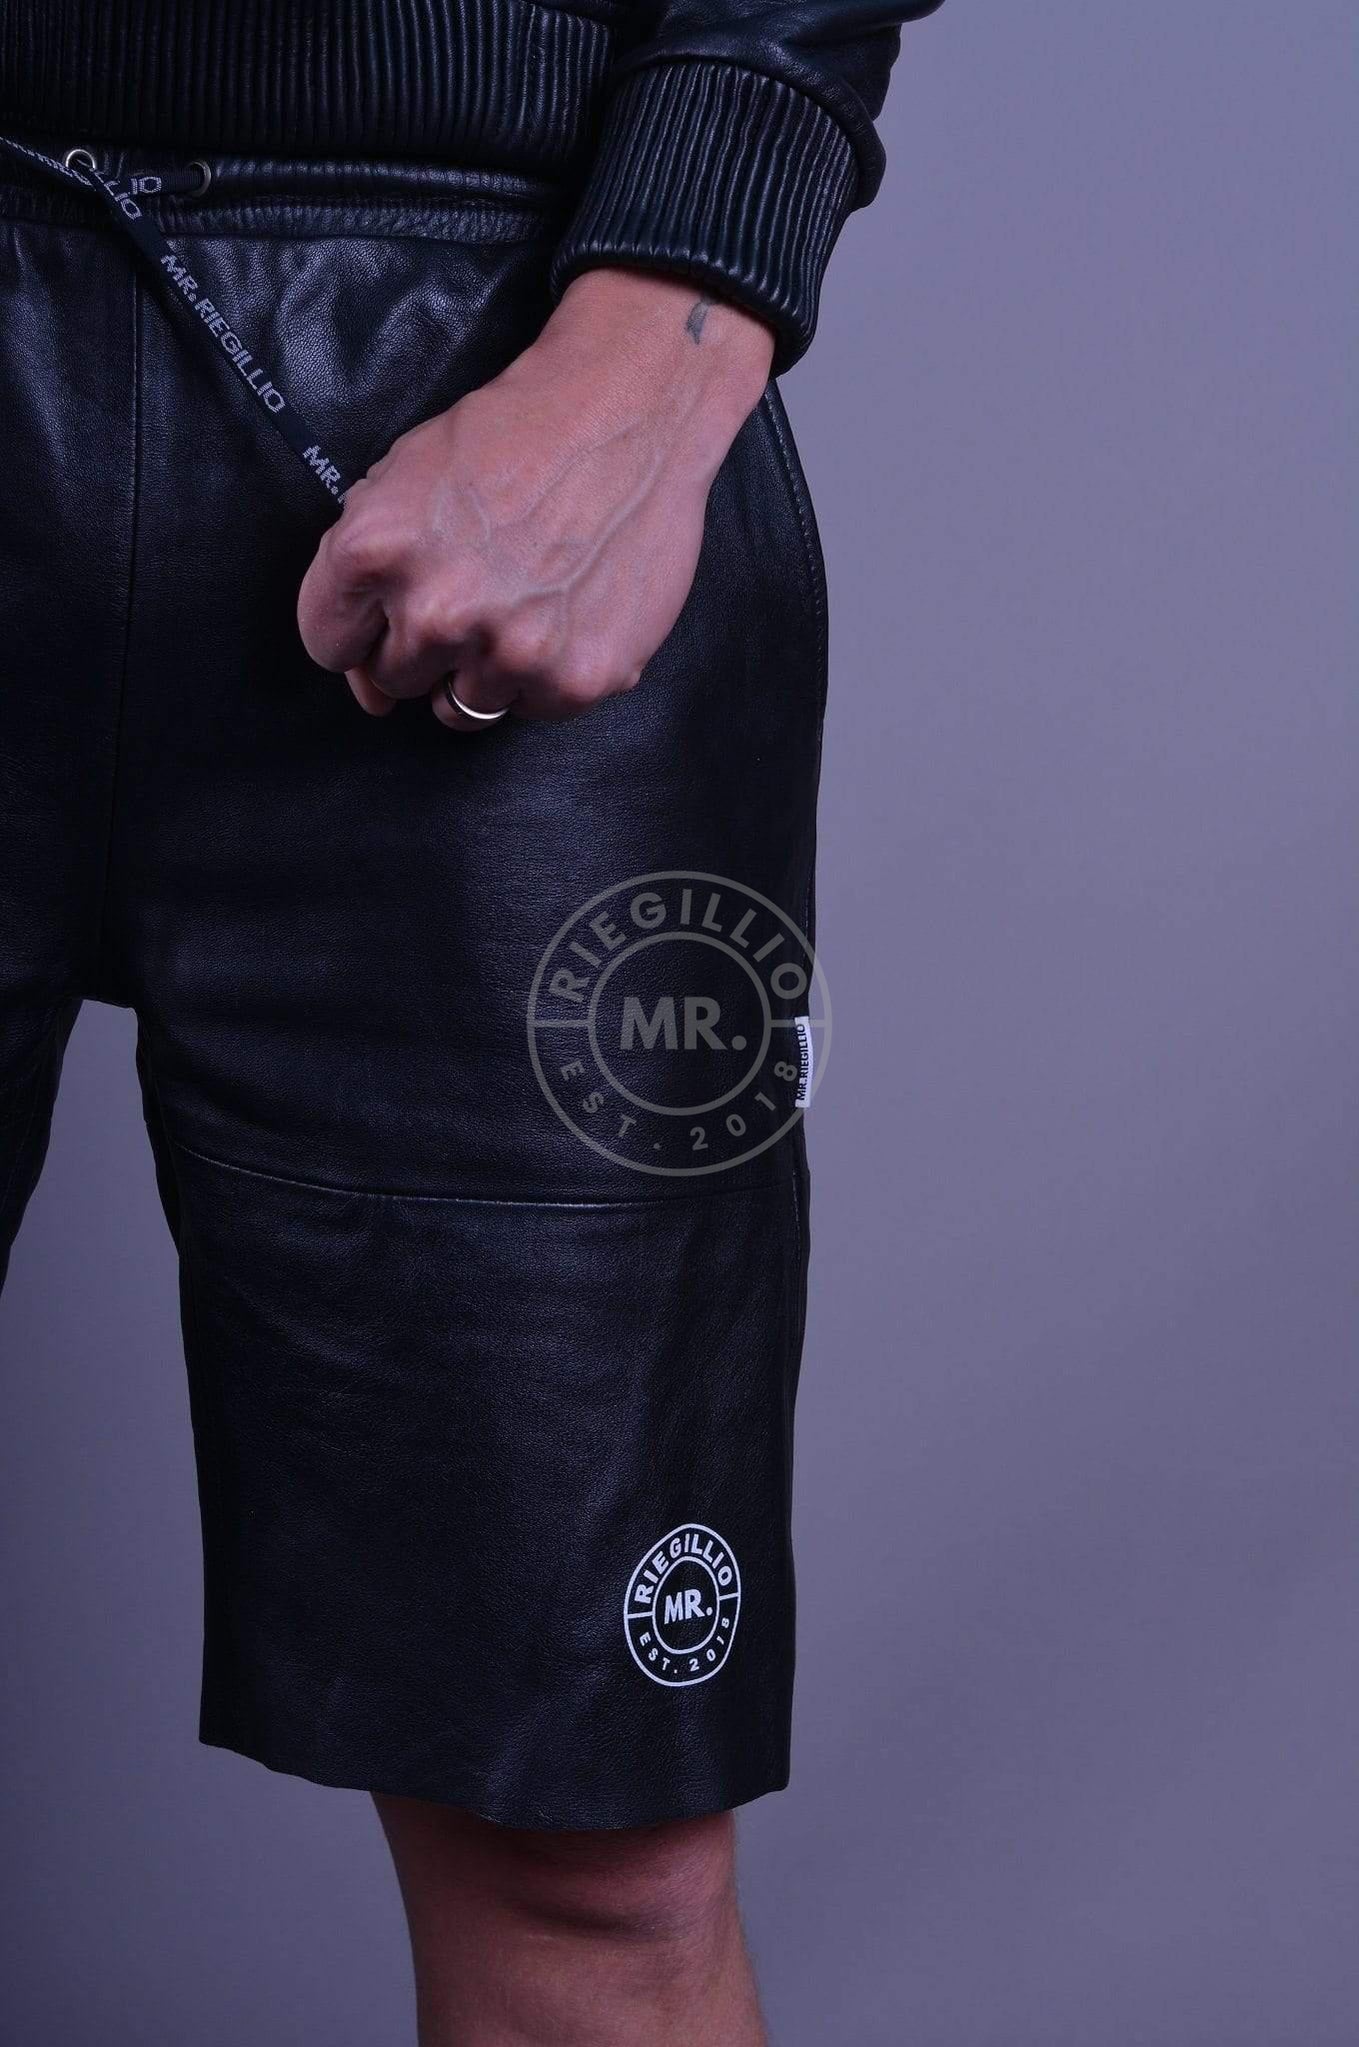 Black Leather Long Short at MR. Riegillio